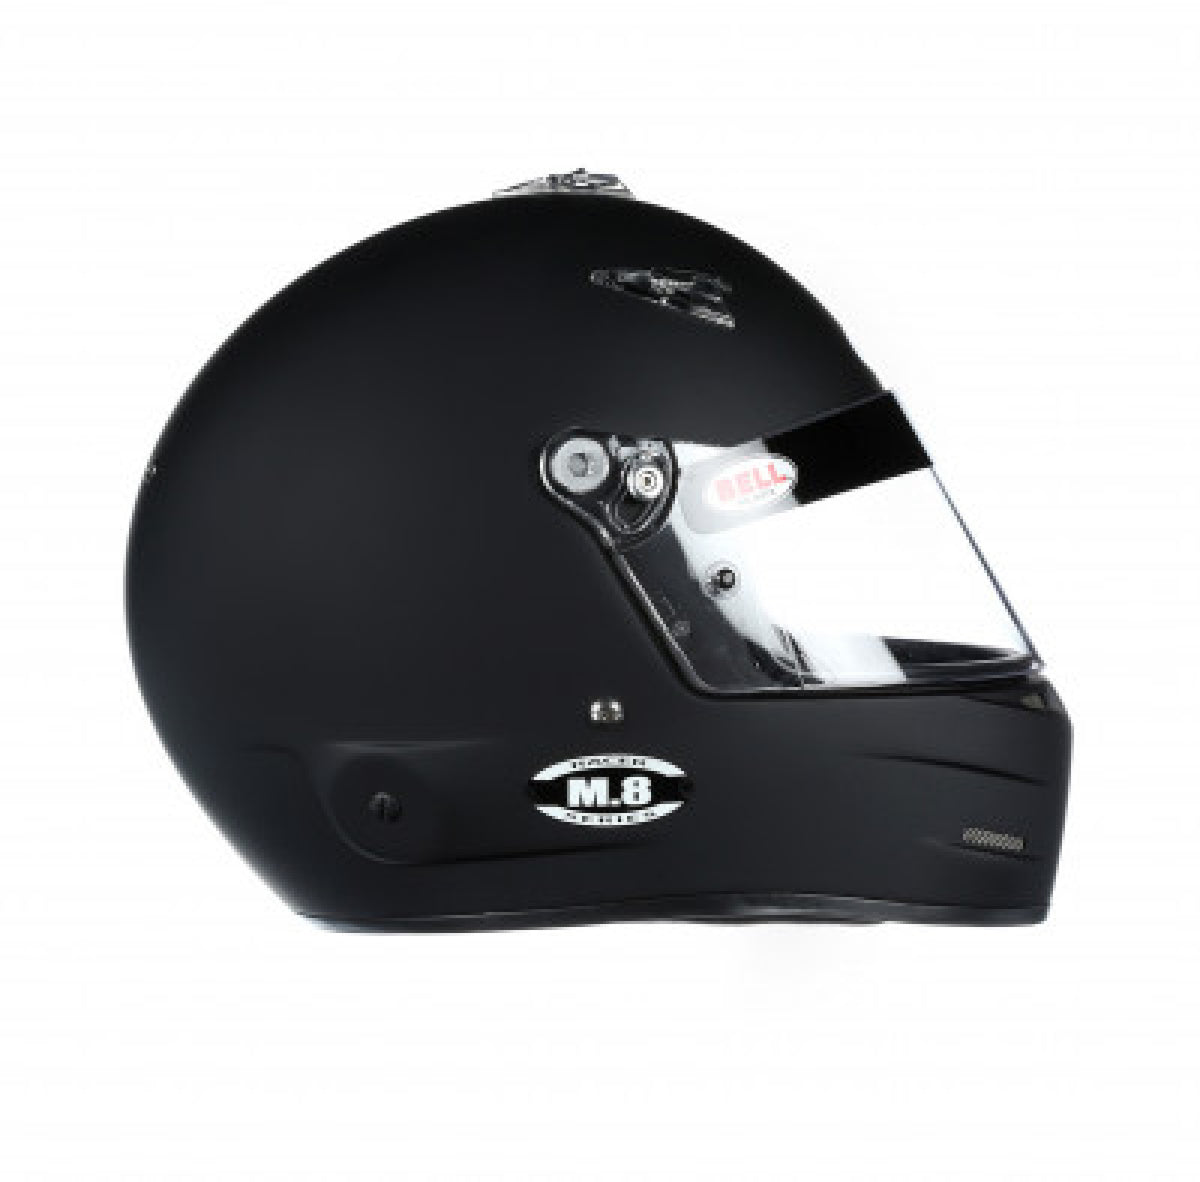 Bell M8 Racing Helmet-Matte Black Size Medium